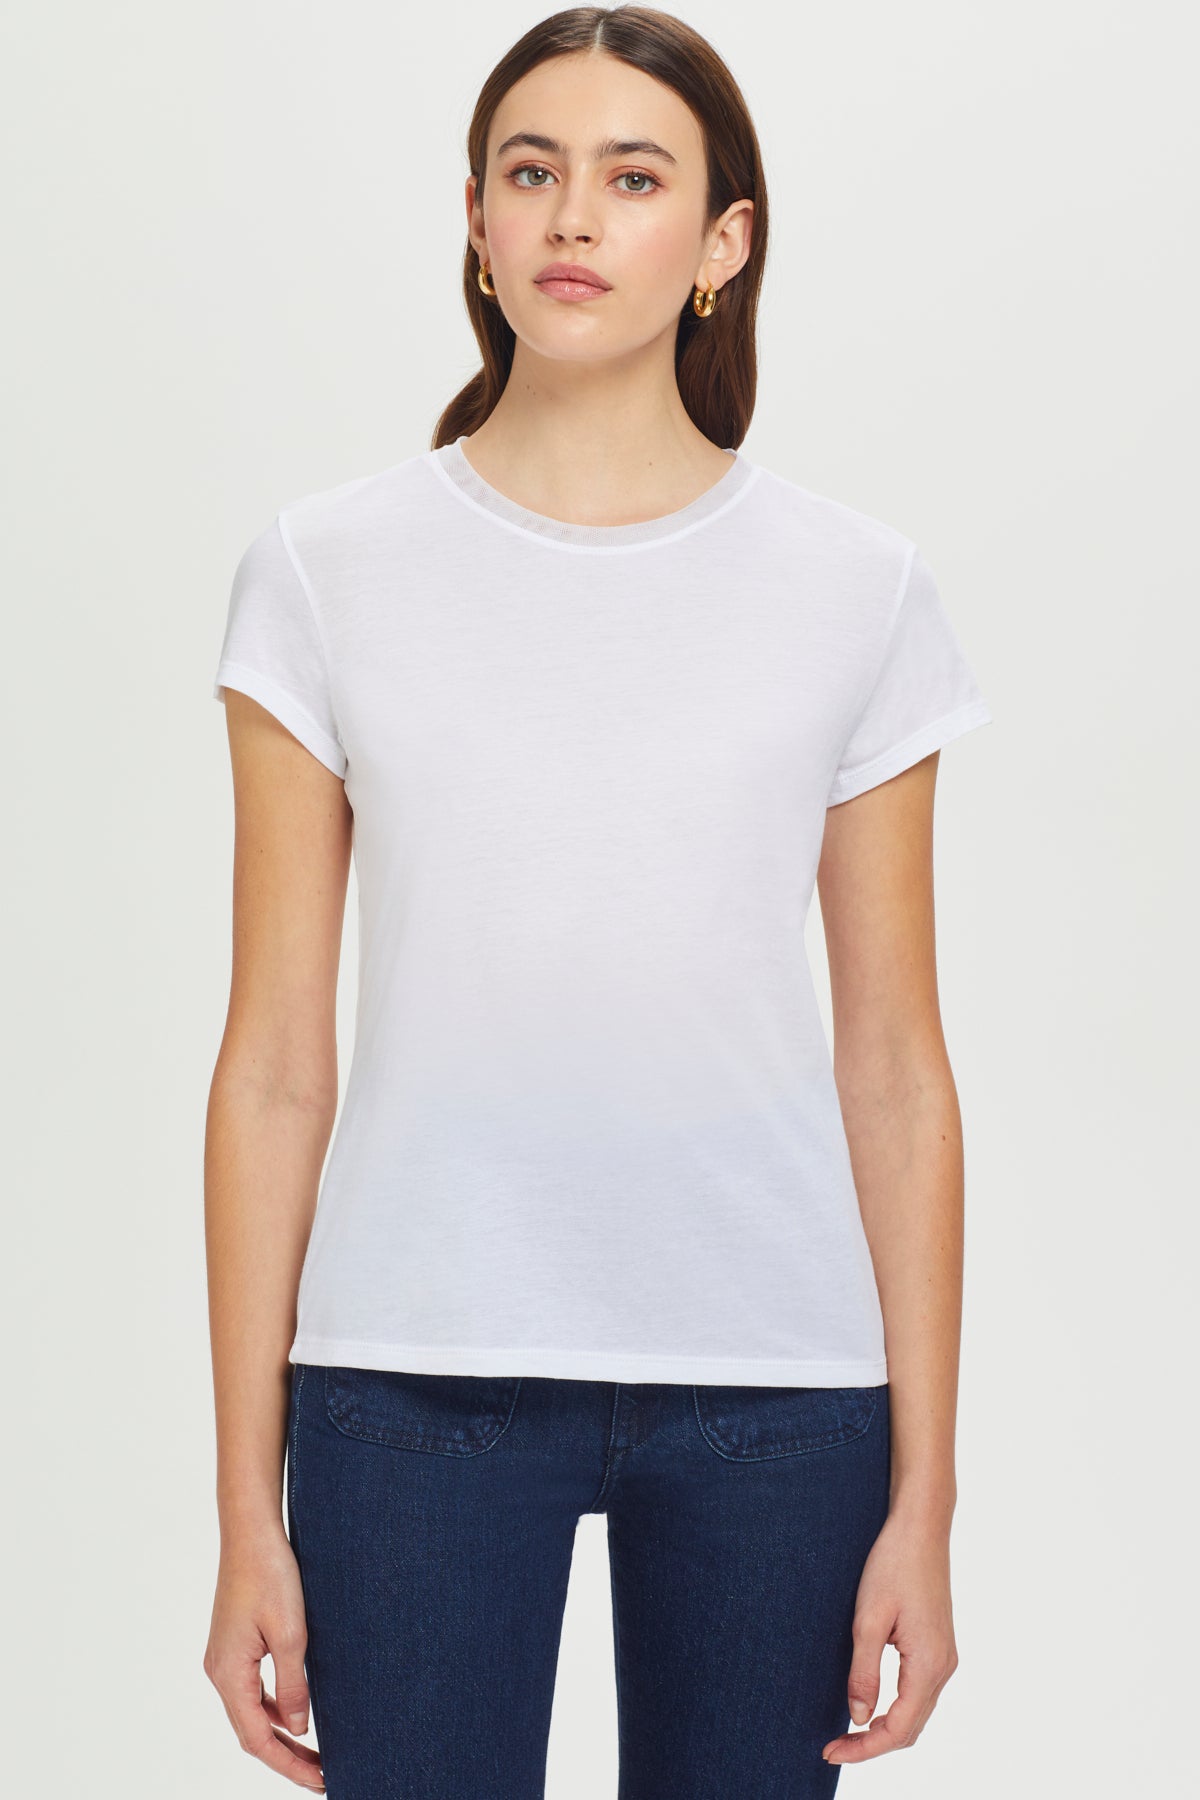 Long Sleeve Mesh T-Shirt - Greg Norman Collection